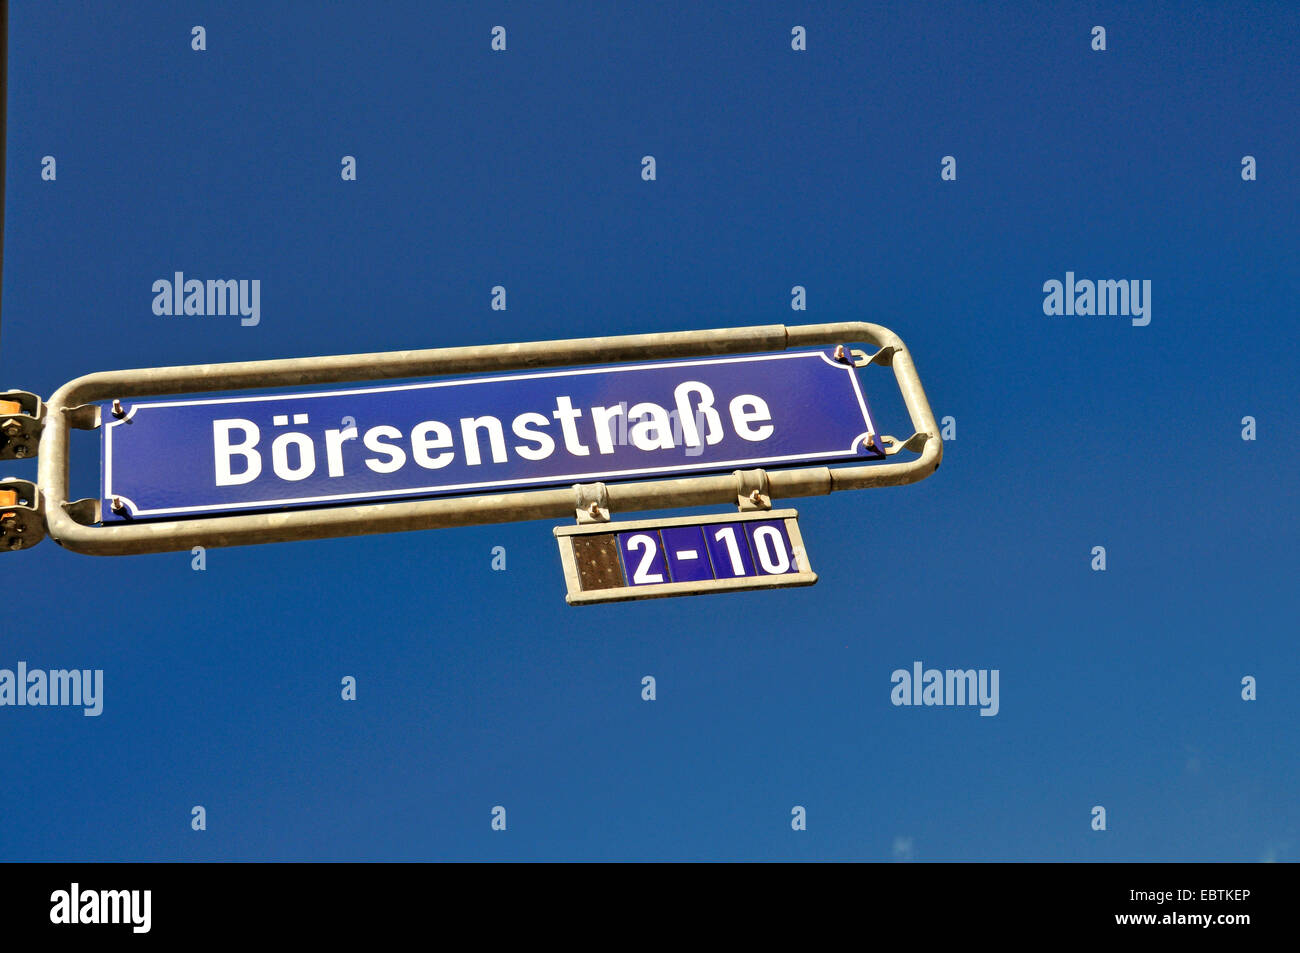 name plate Boersenstrasse 2-10, street of stock exchange, in the financial district of Frankfurt/Main, Germany, Hesse, Frankfurt/Main Stock Photo